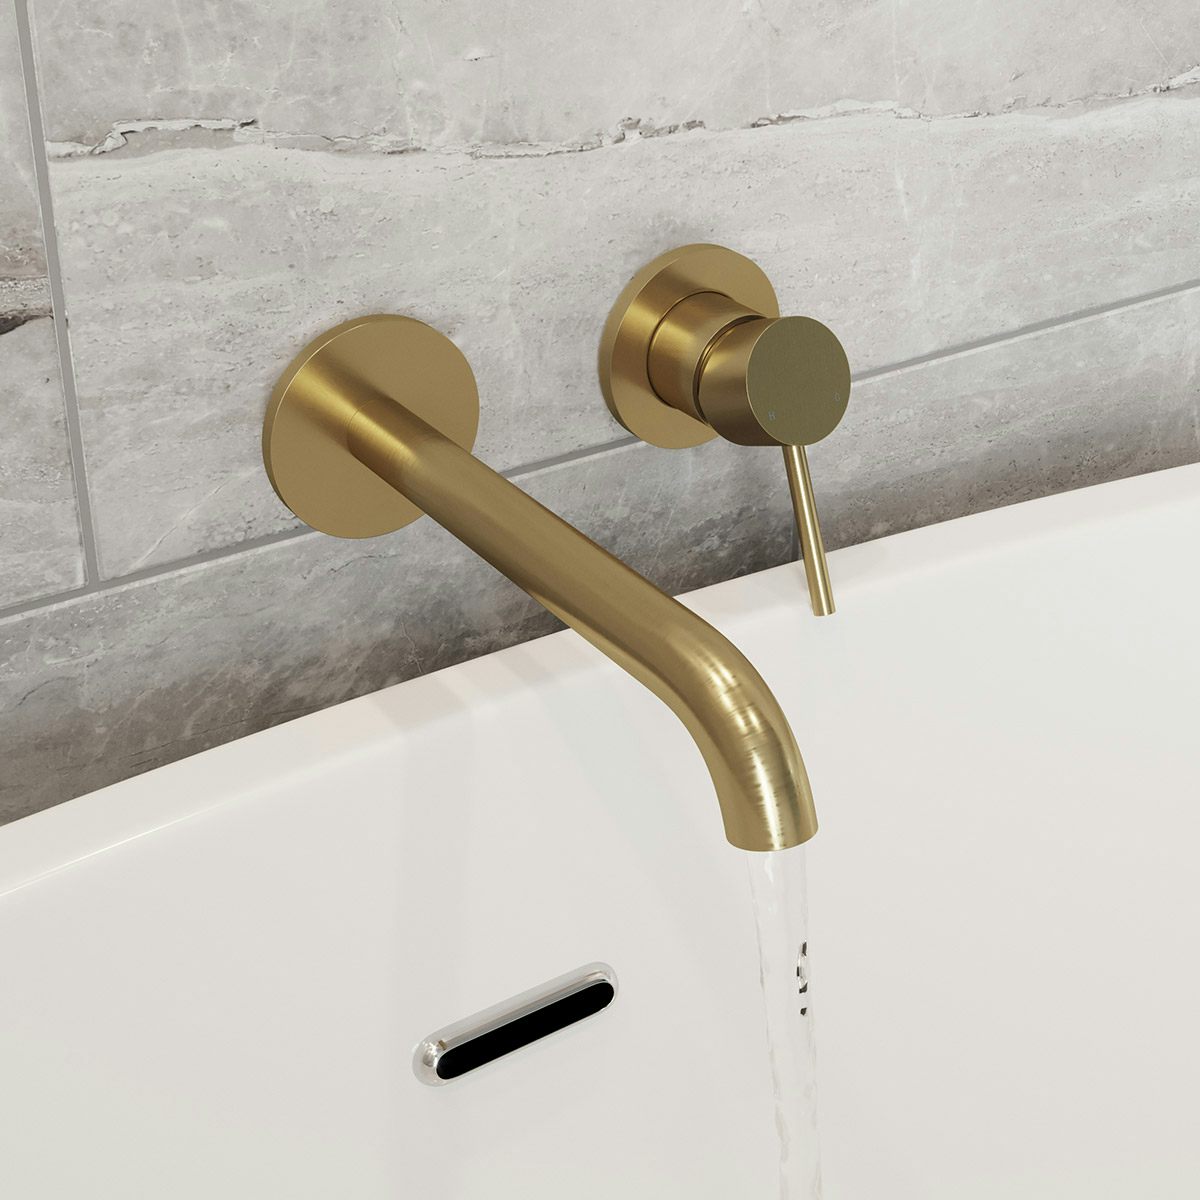 ModeSpencerround brushed brass wall mounted bath mixer tap ...